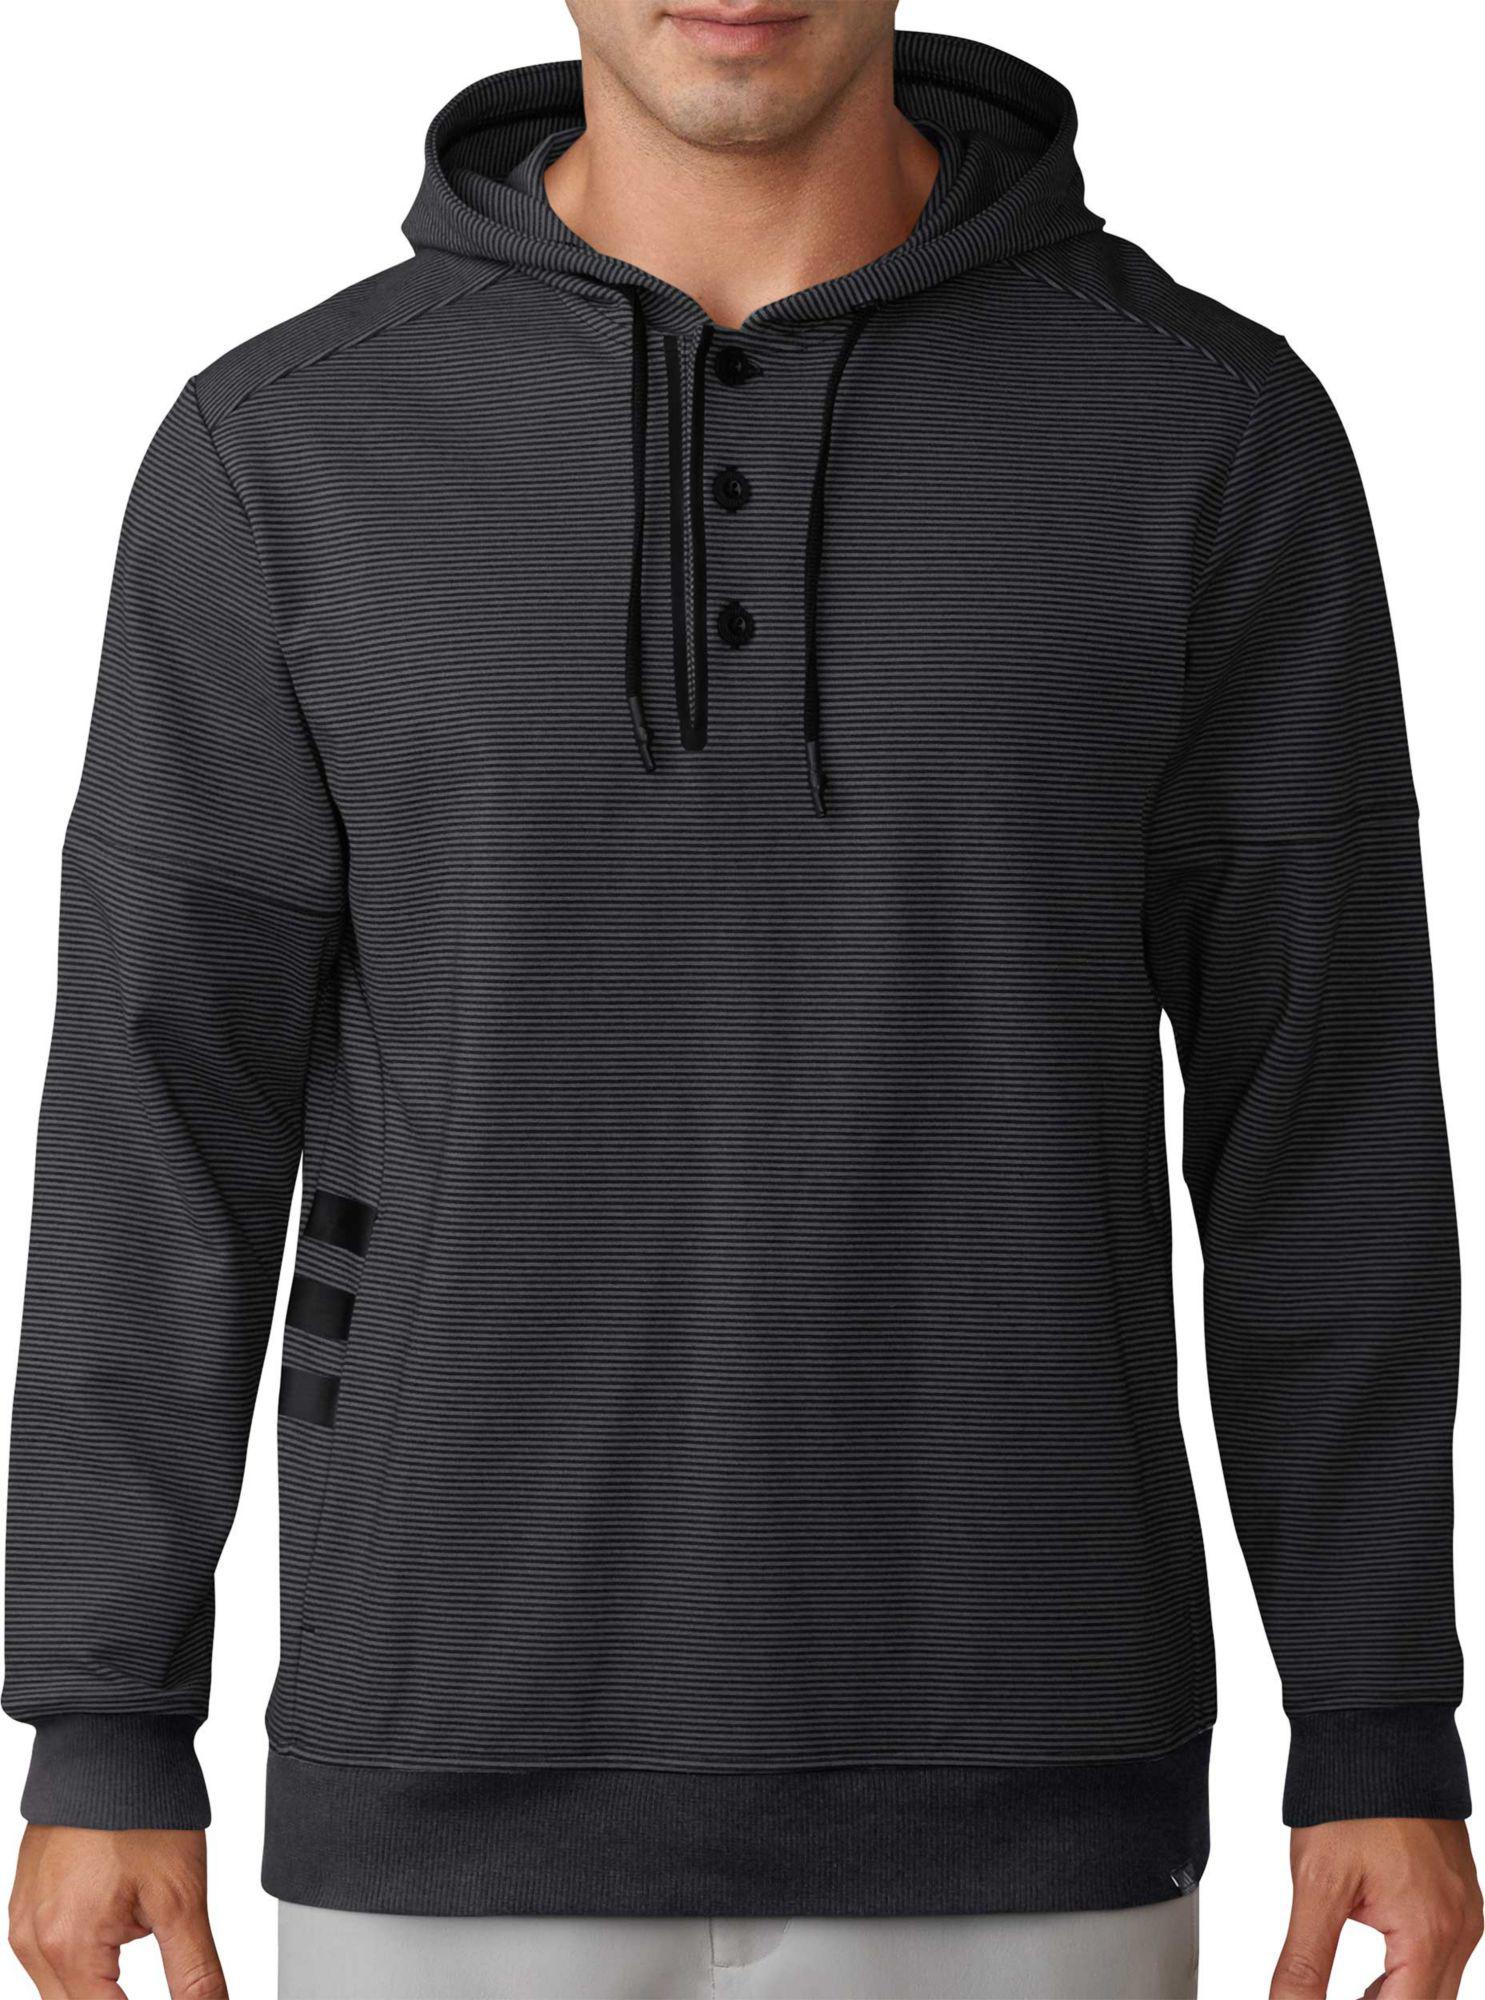 Adidas Cotton Adicross Bonded Golf Hoodie For Men - Lyst-2071